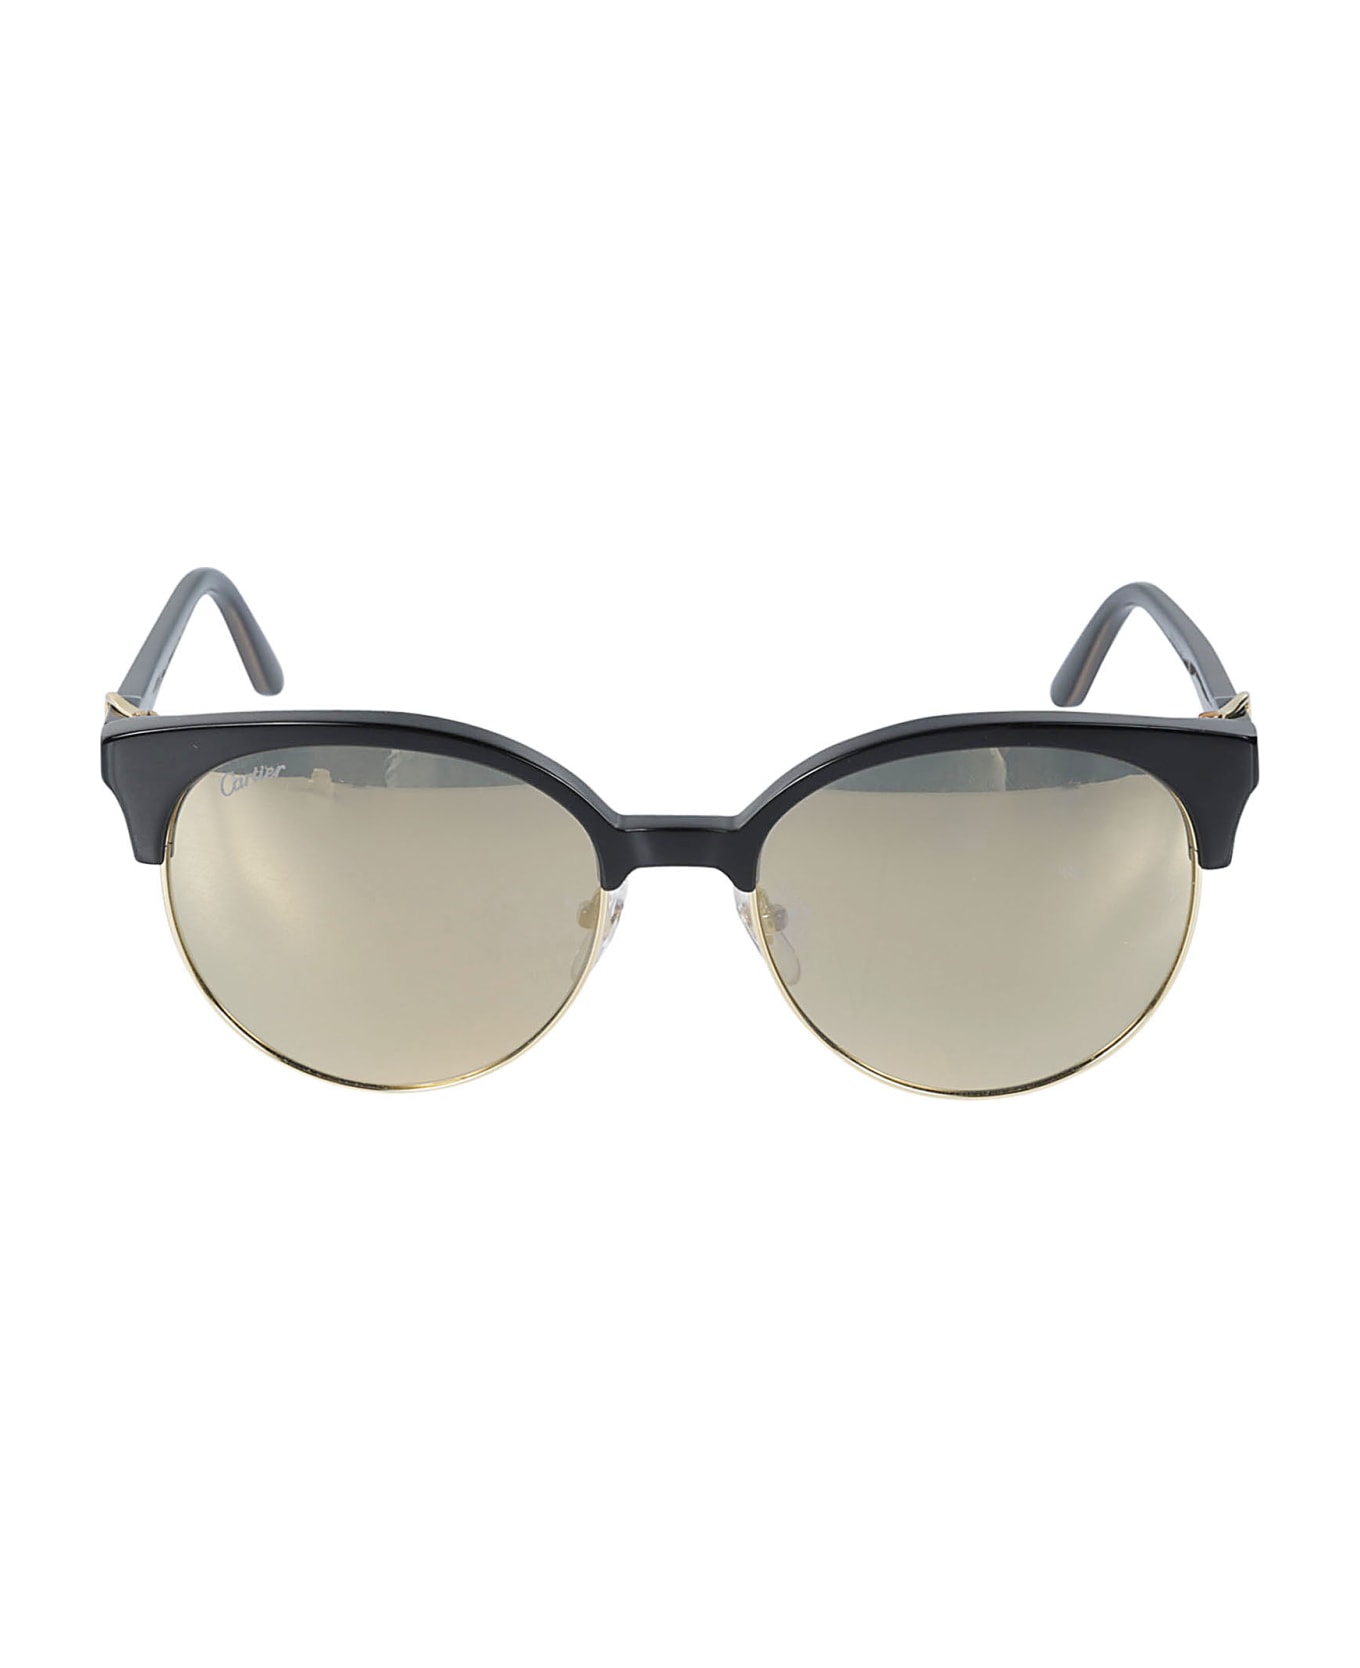 Cartier Eyewear Clubmaster Style Sunglasses - Black